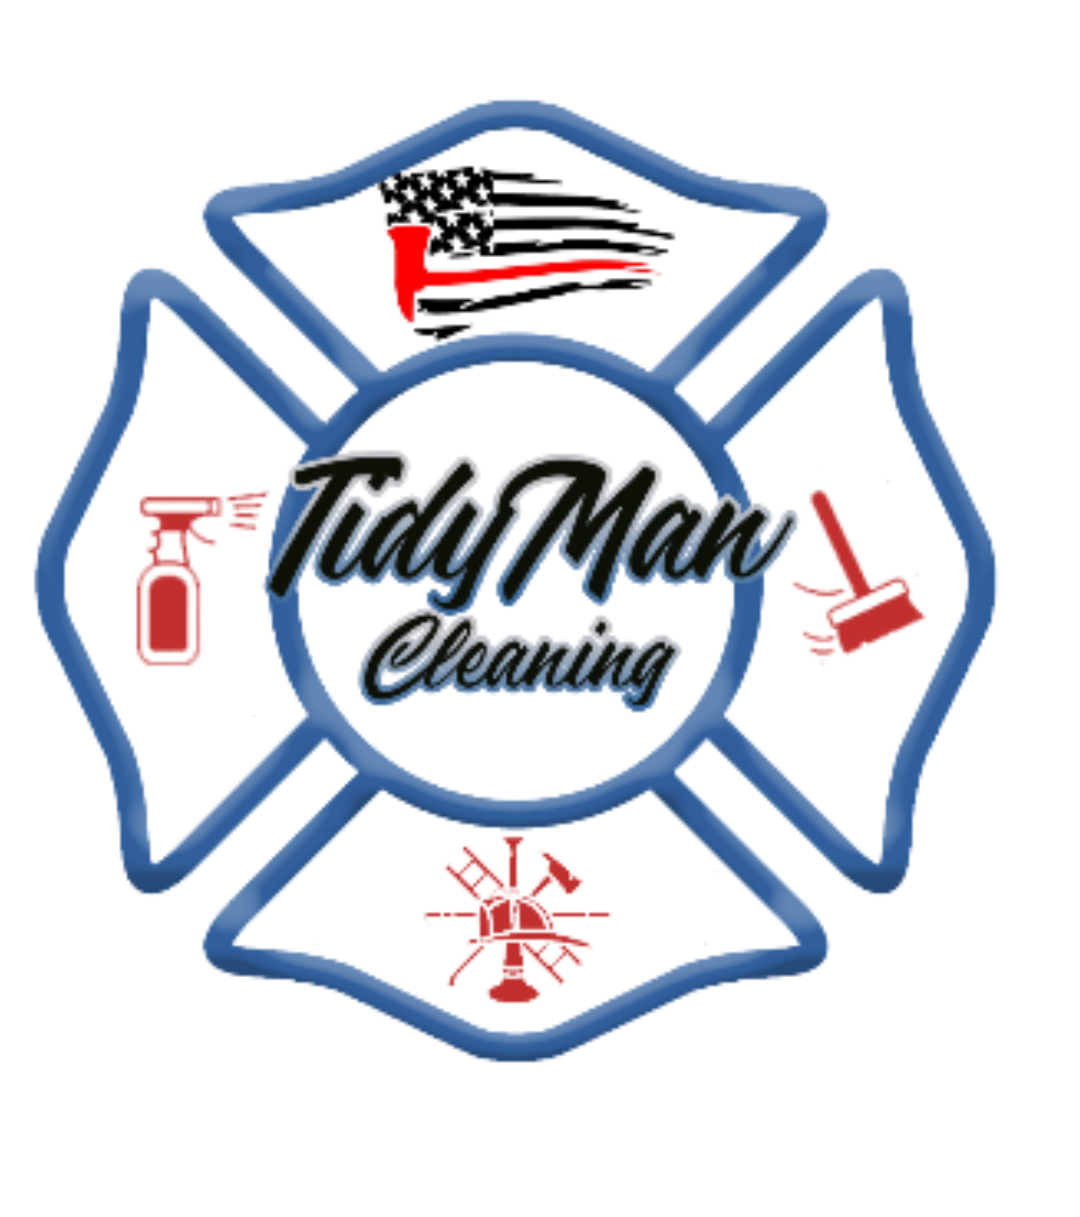 Tidy Man Cleaning, LLC Logo